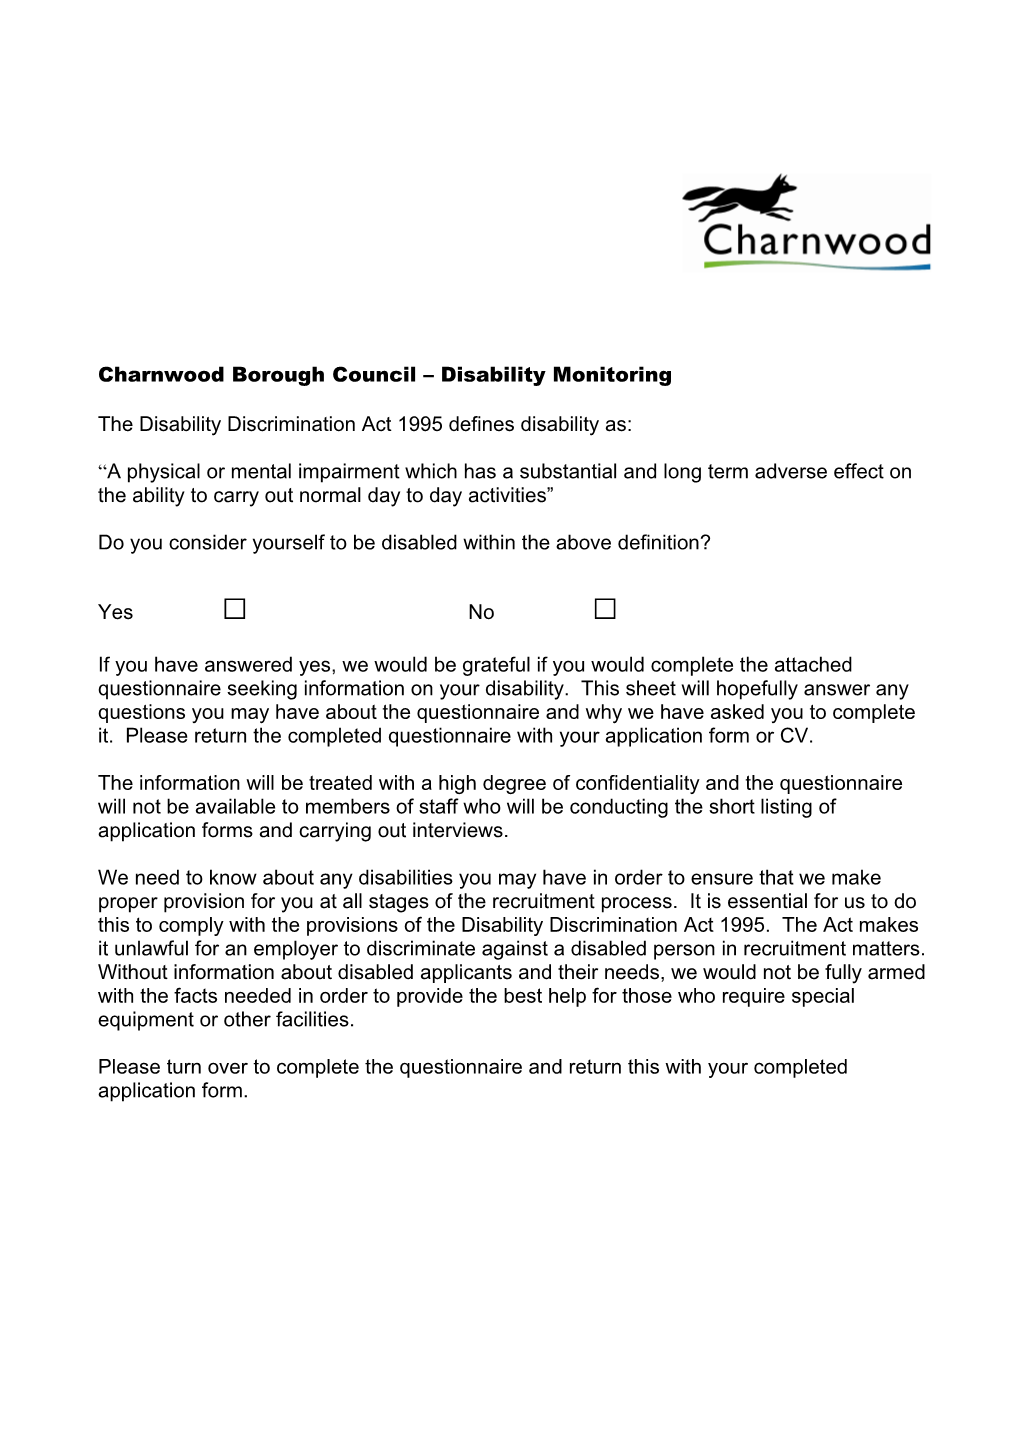 Charnwood Borough Council Disability Monitoring